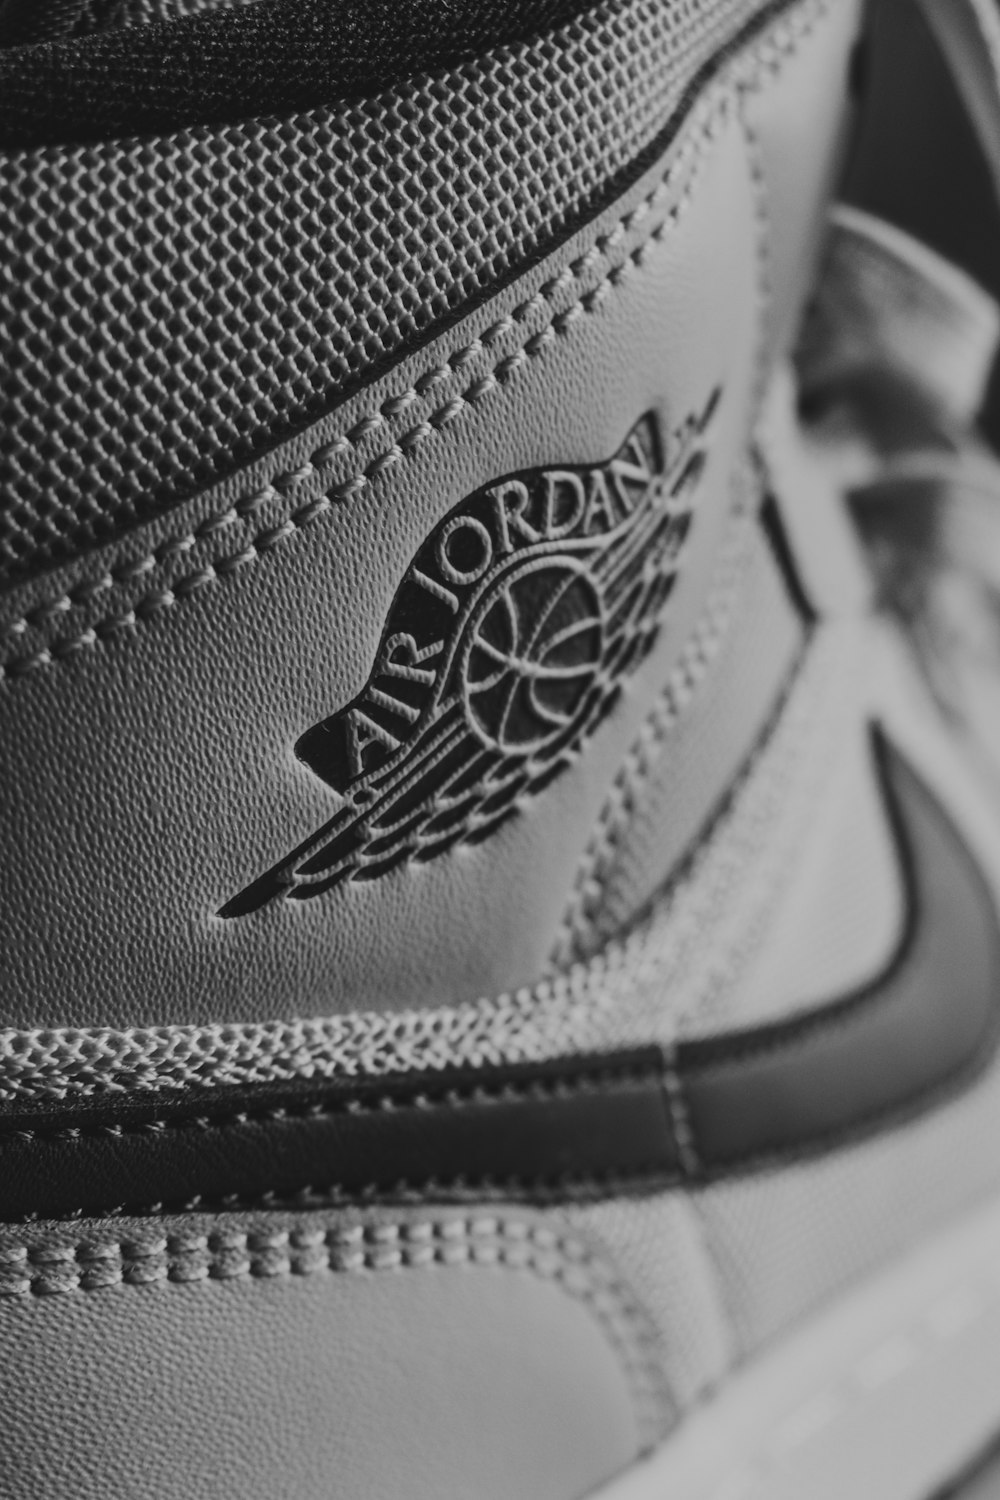 Brown and black nike high top sneakers photo – Free Grey Image on Unsplash